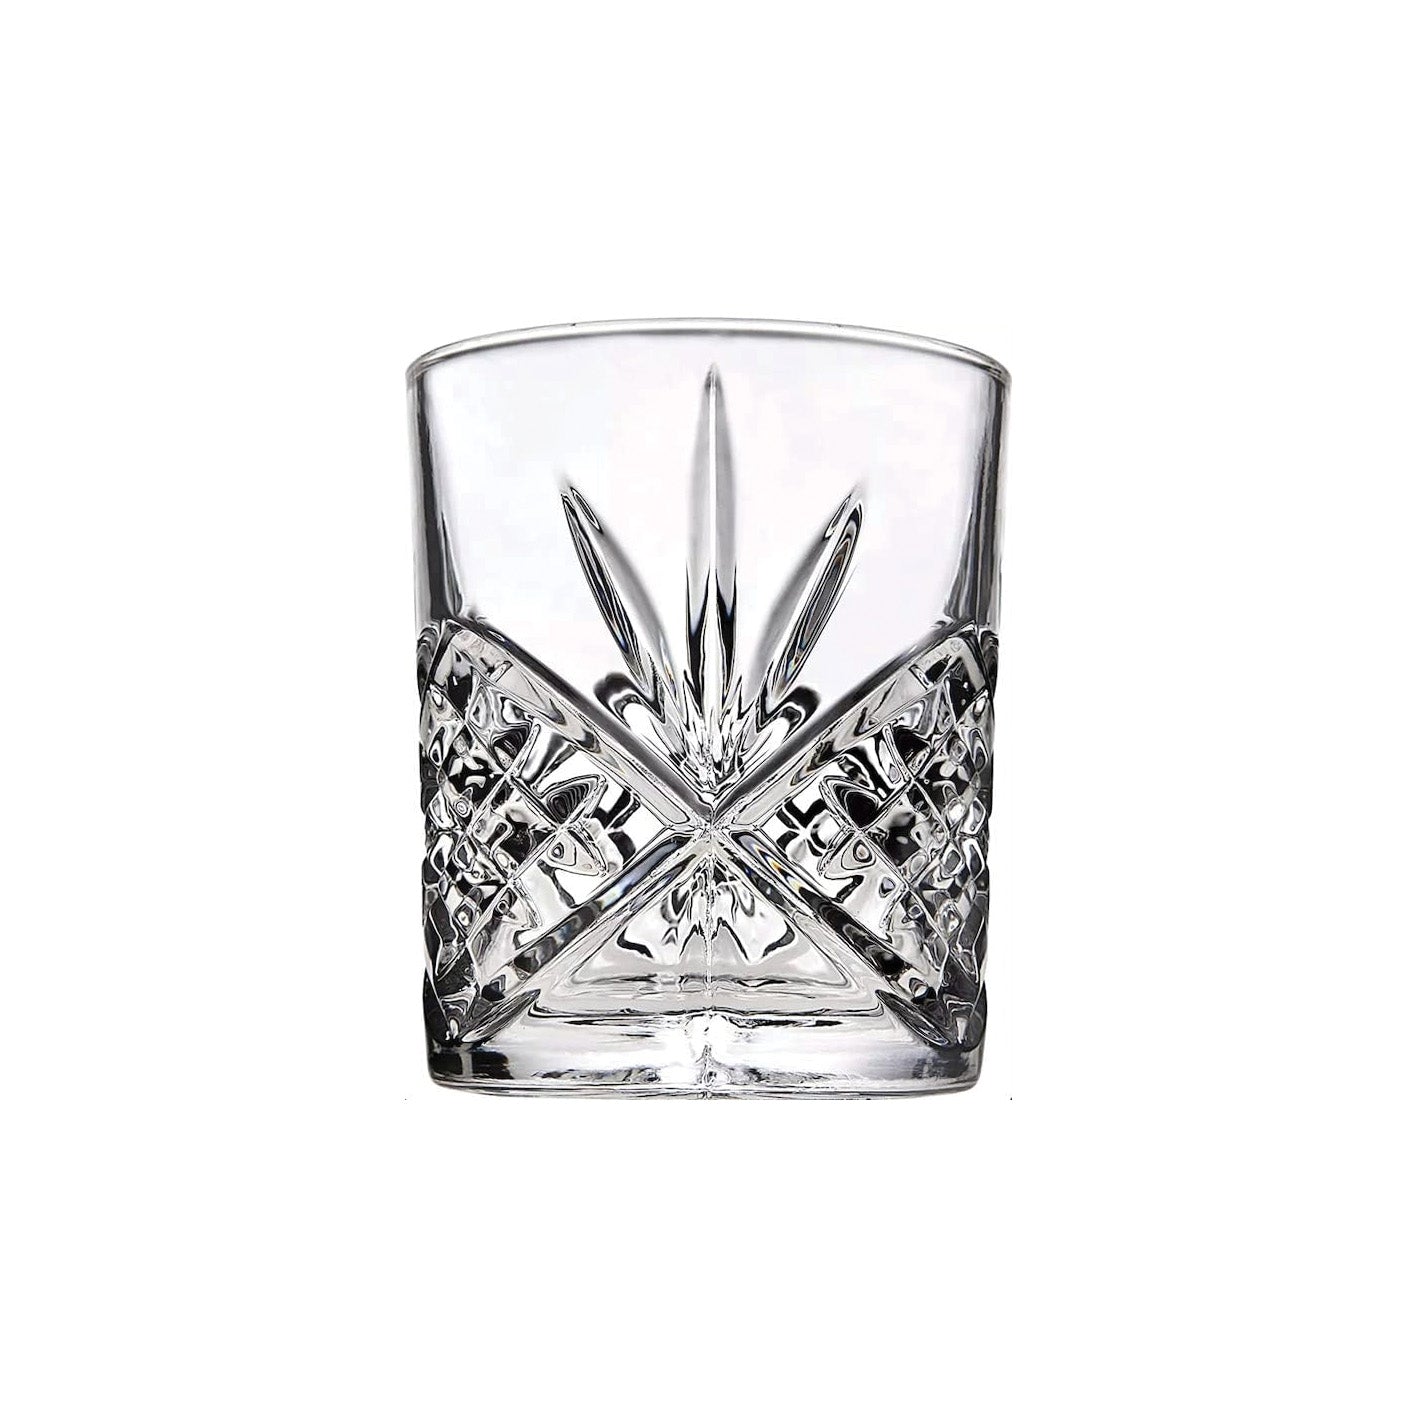 Glass cup set (6pcs) - DSKB033-2